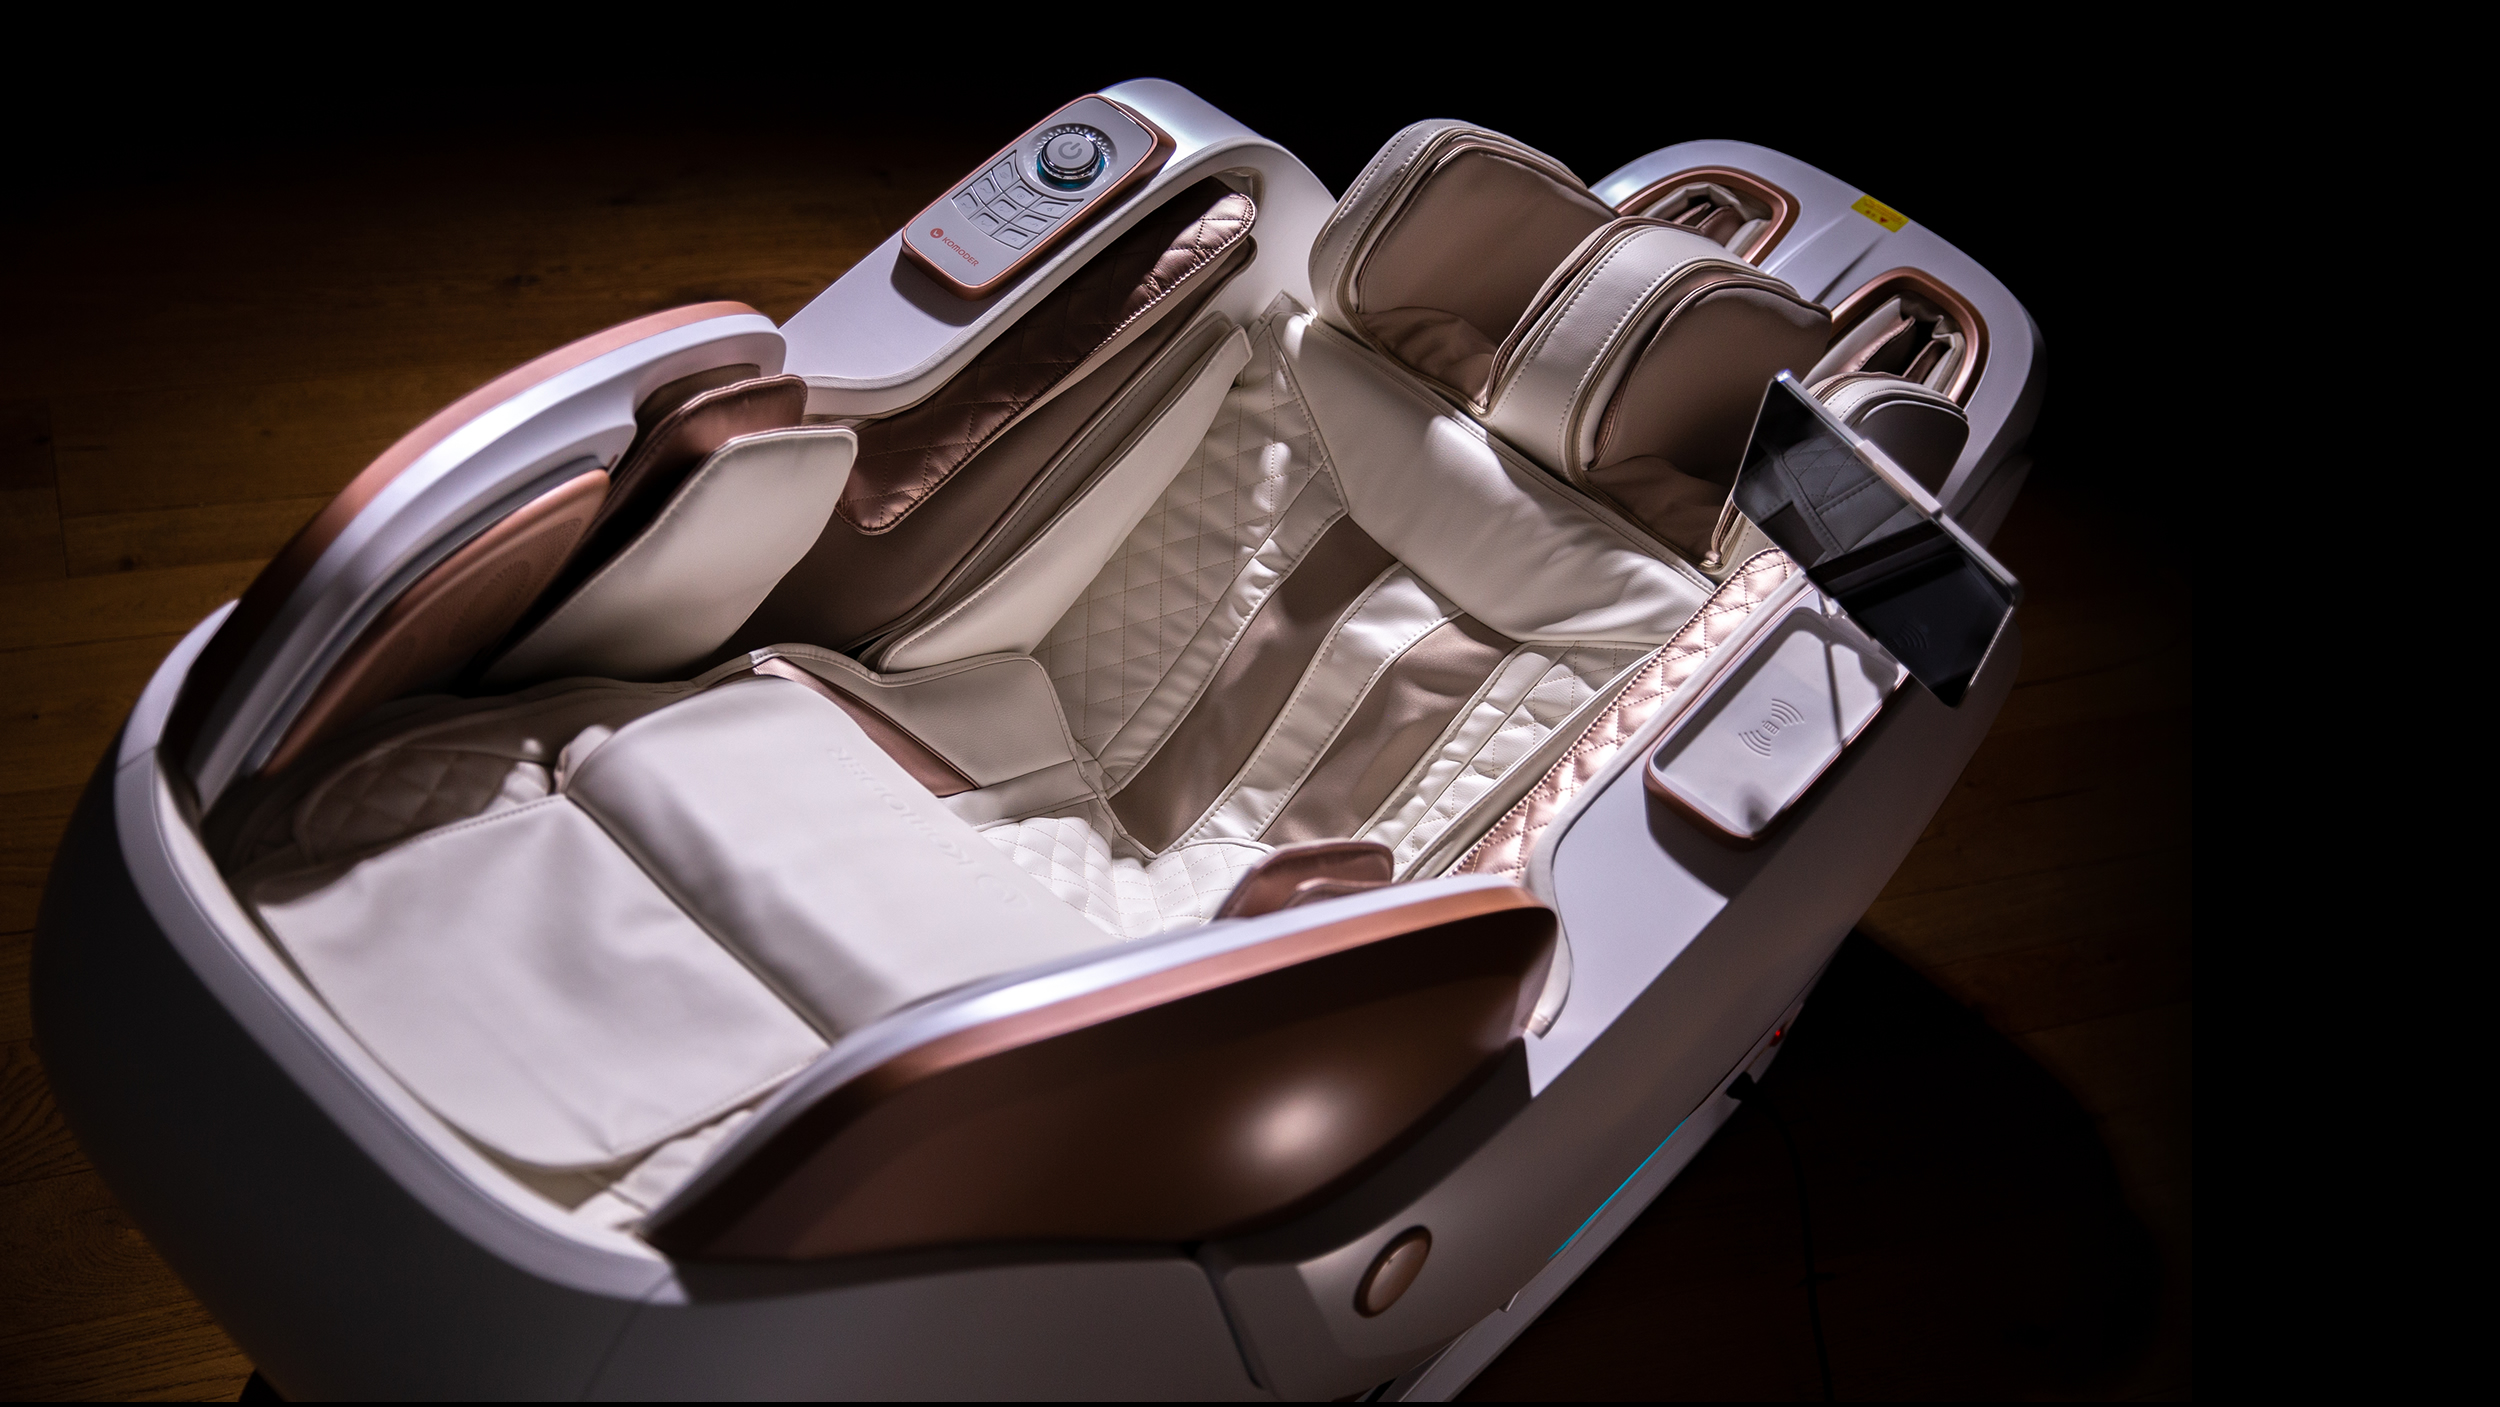 TITAN II Ultra High–end Dual Track Massage Chair